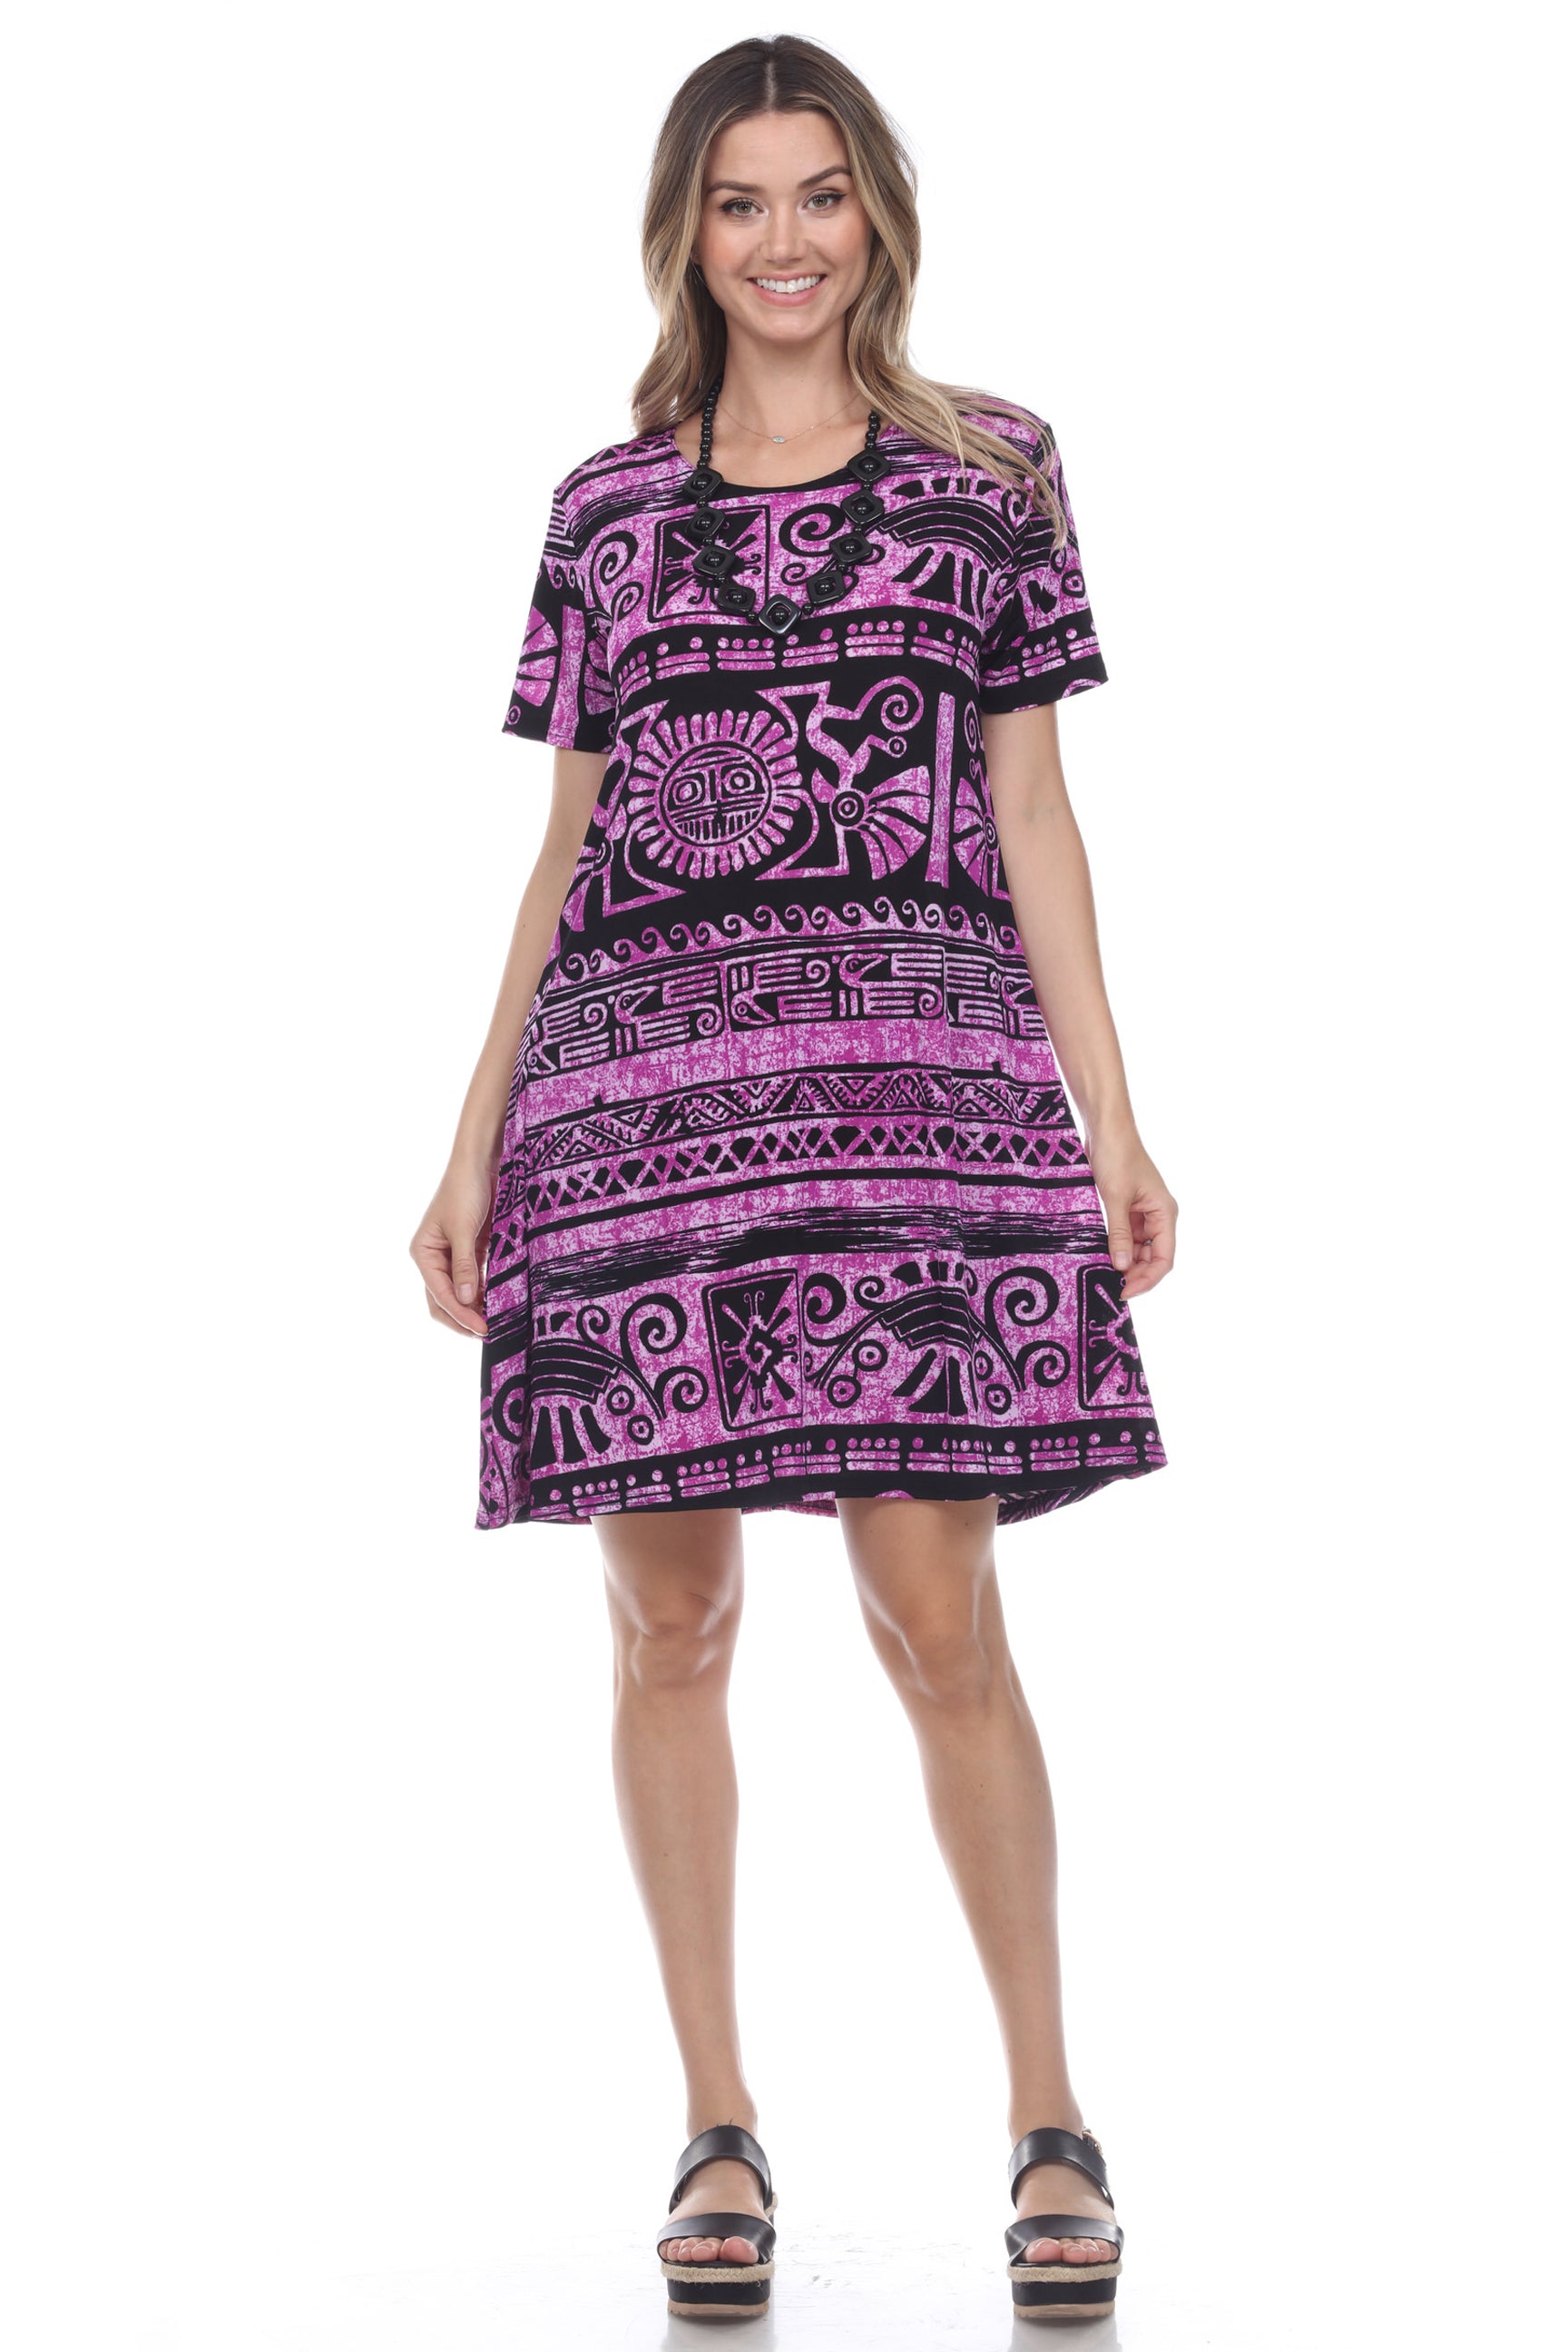 Women's Stretchy Missy Dress Short Sleeve Print-7004BN-SRP1-W901 - Jostar Online